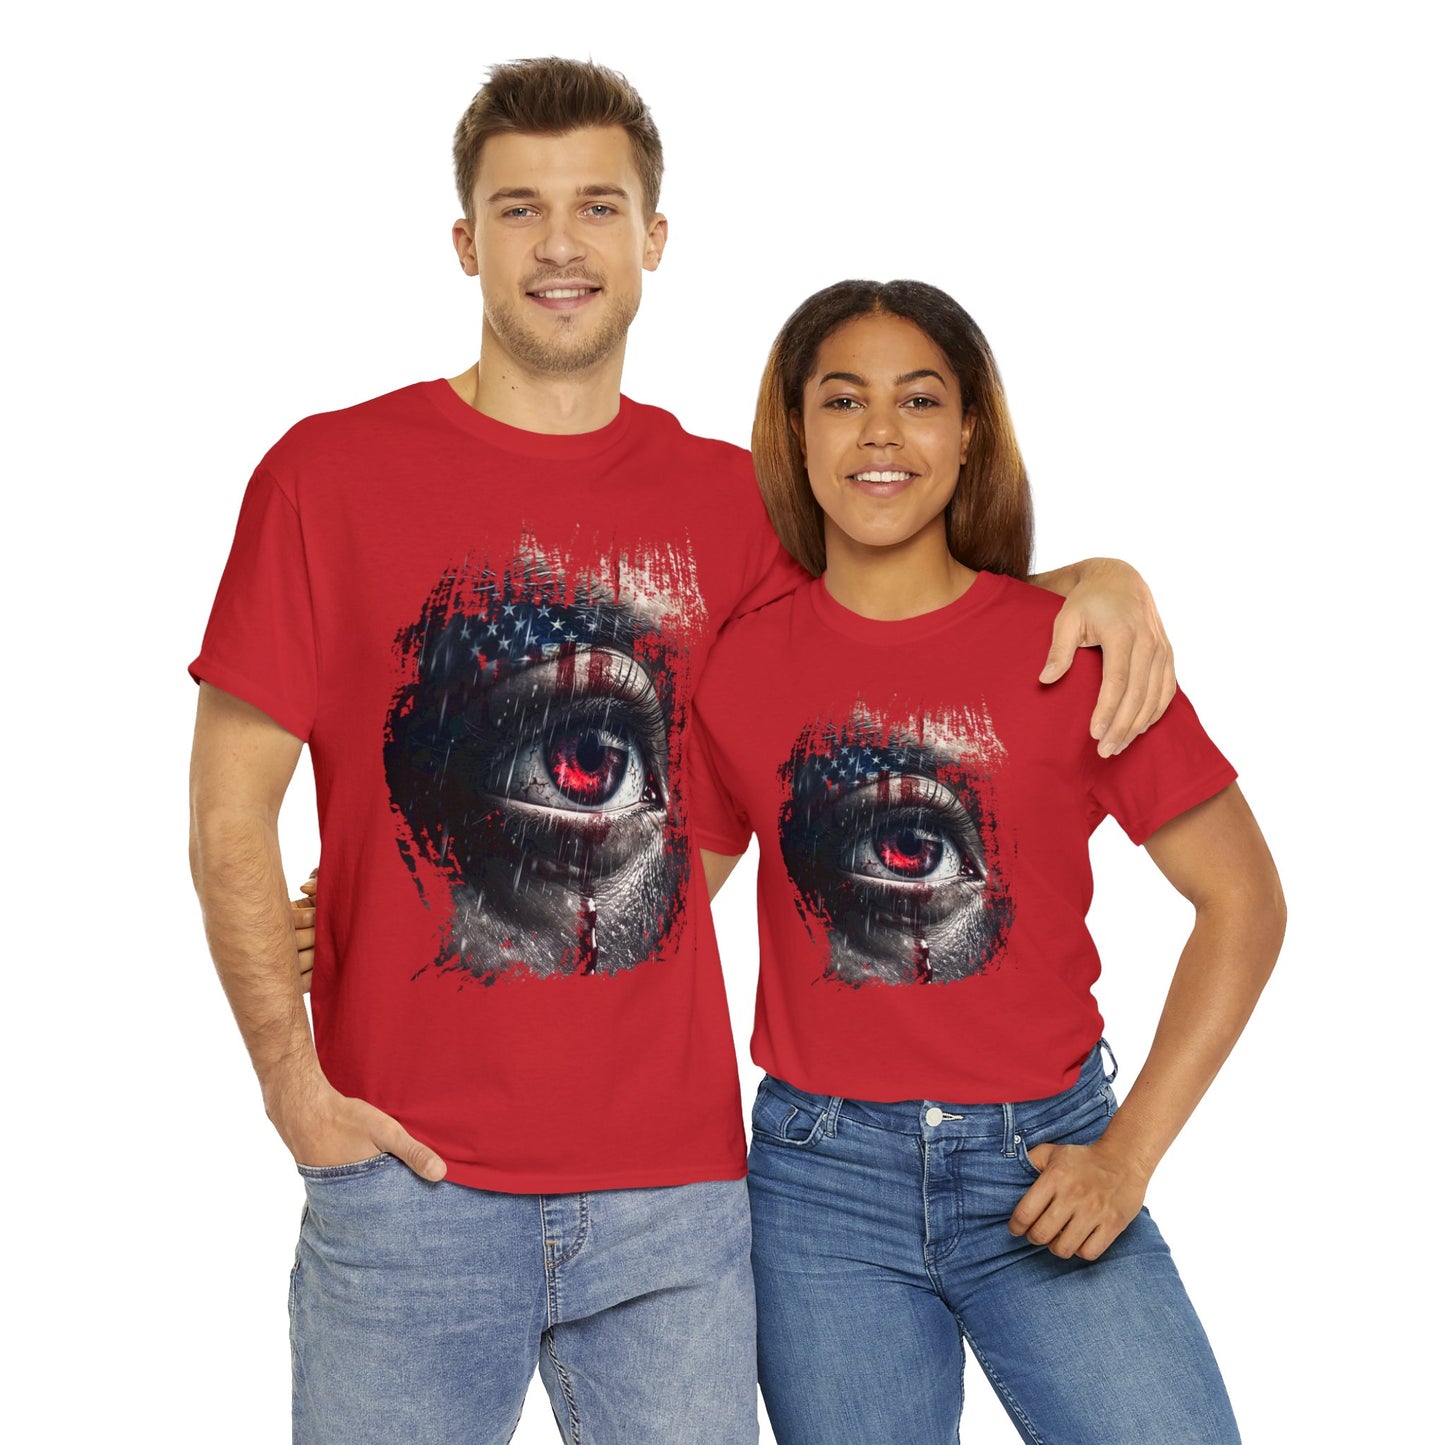 The American eye face Unisex Heavy Cotton Tee (t-shirt)